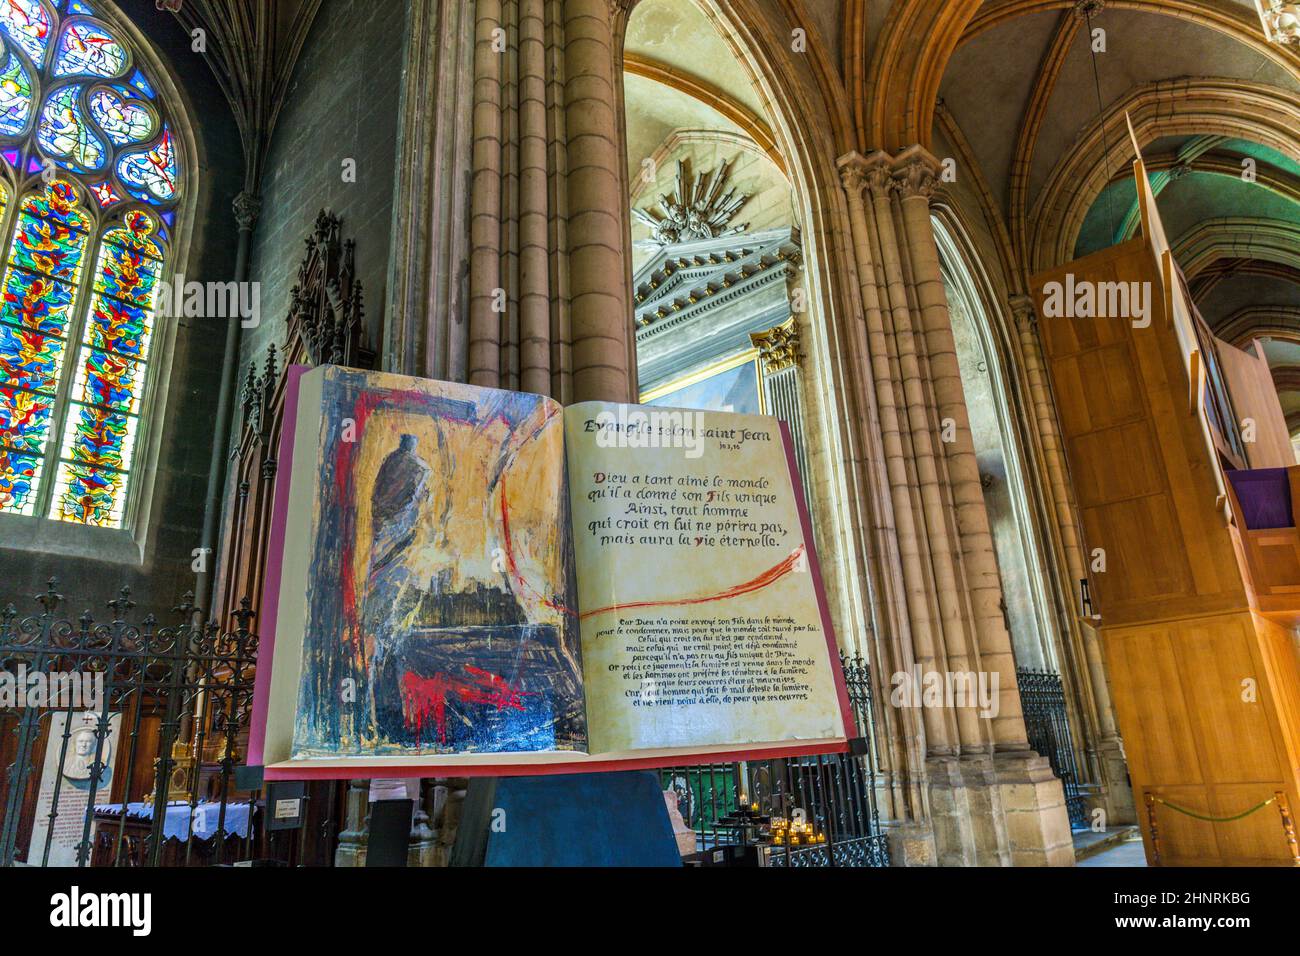 Inside the nave of the Cathedrale Saint-Jean-Baptiste de Lyon - Saint John Stock Photo